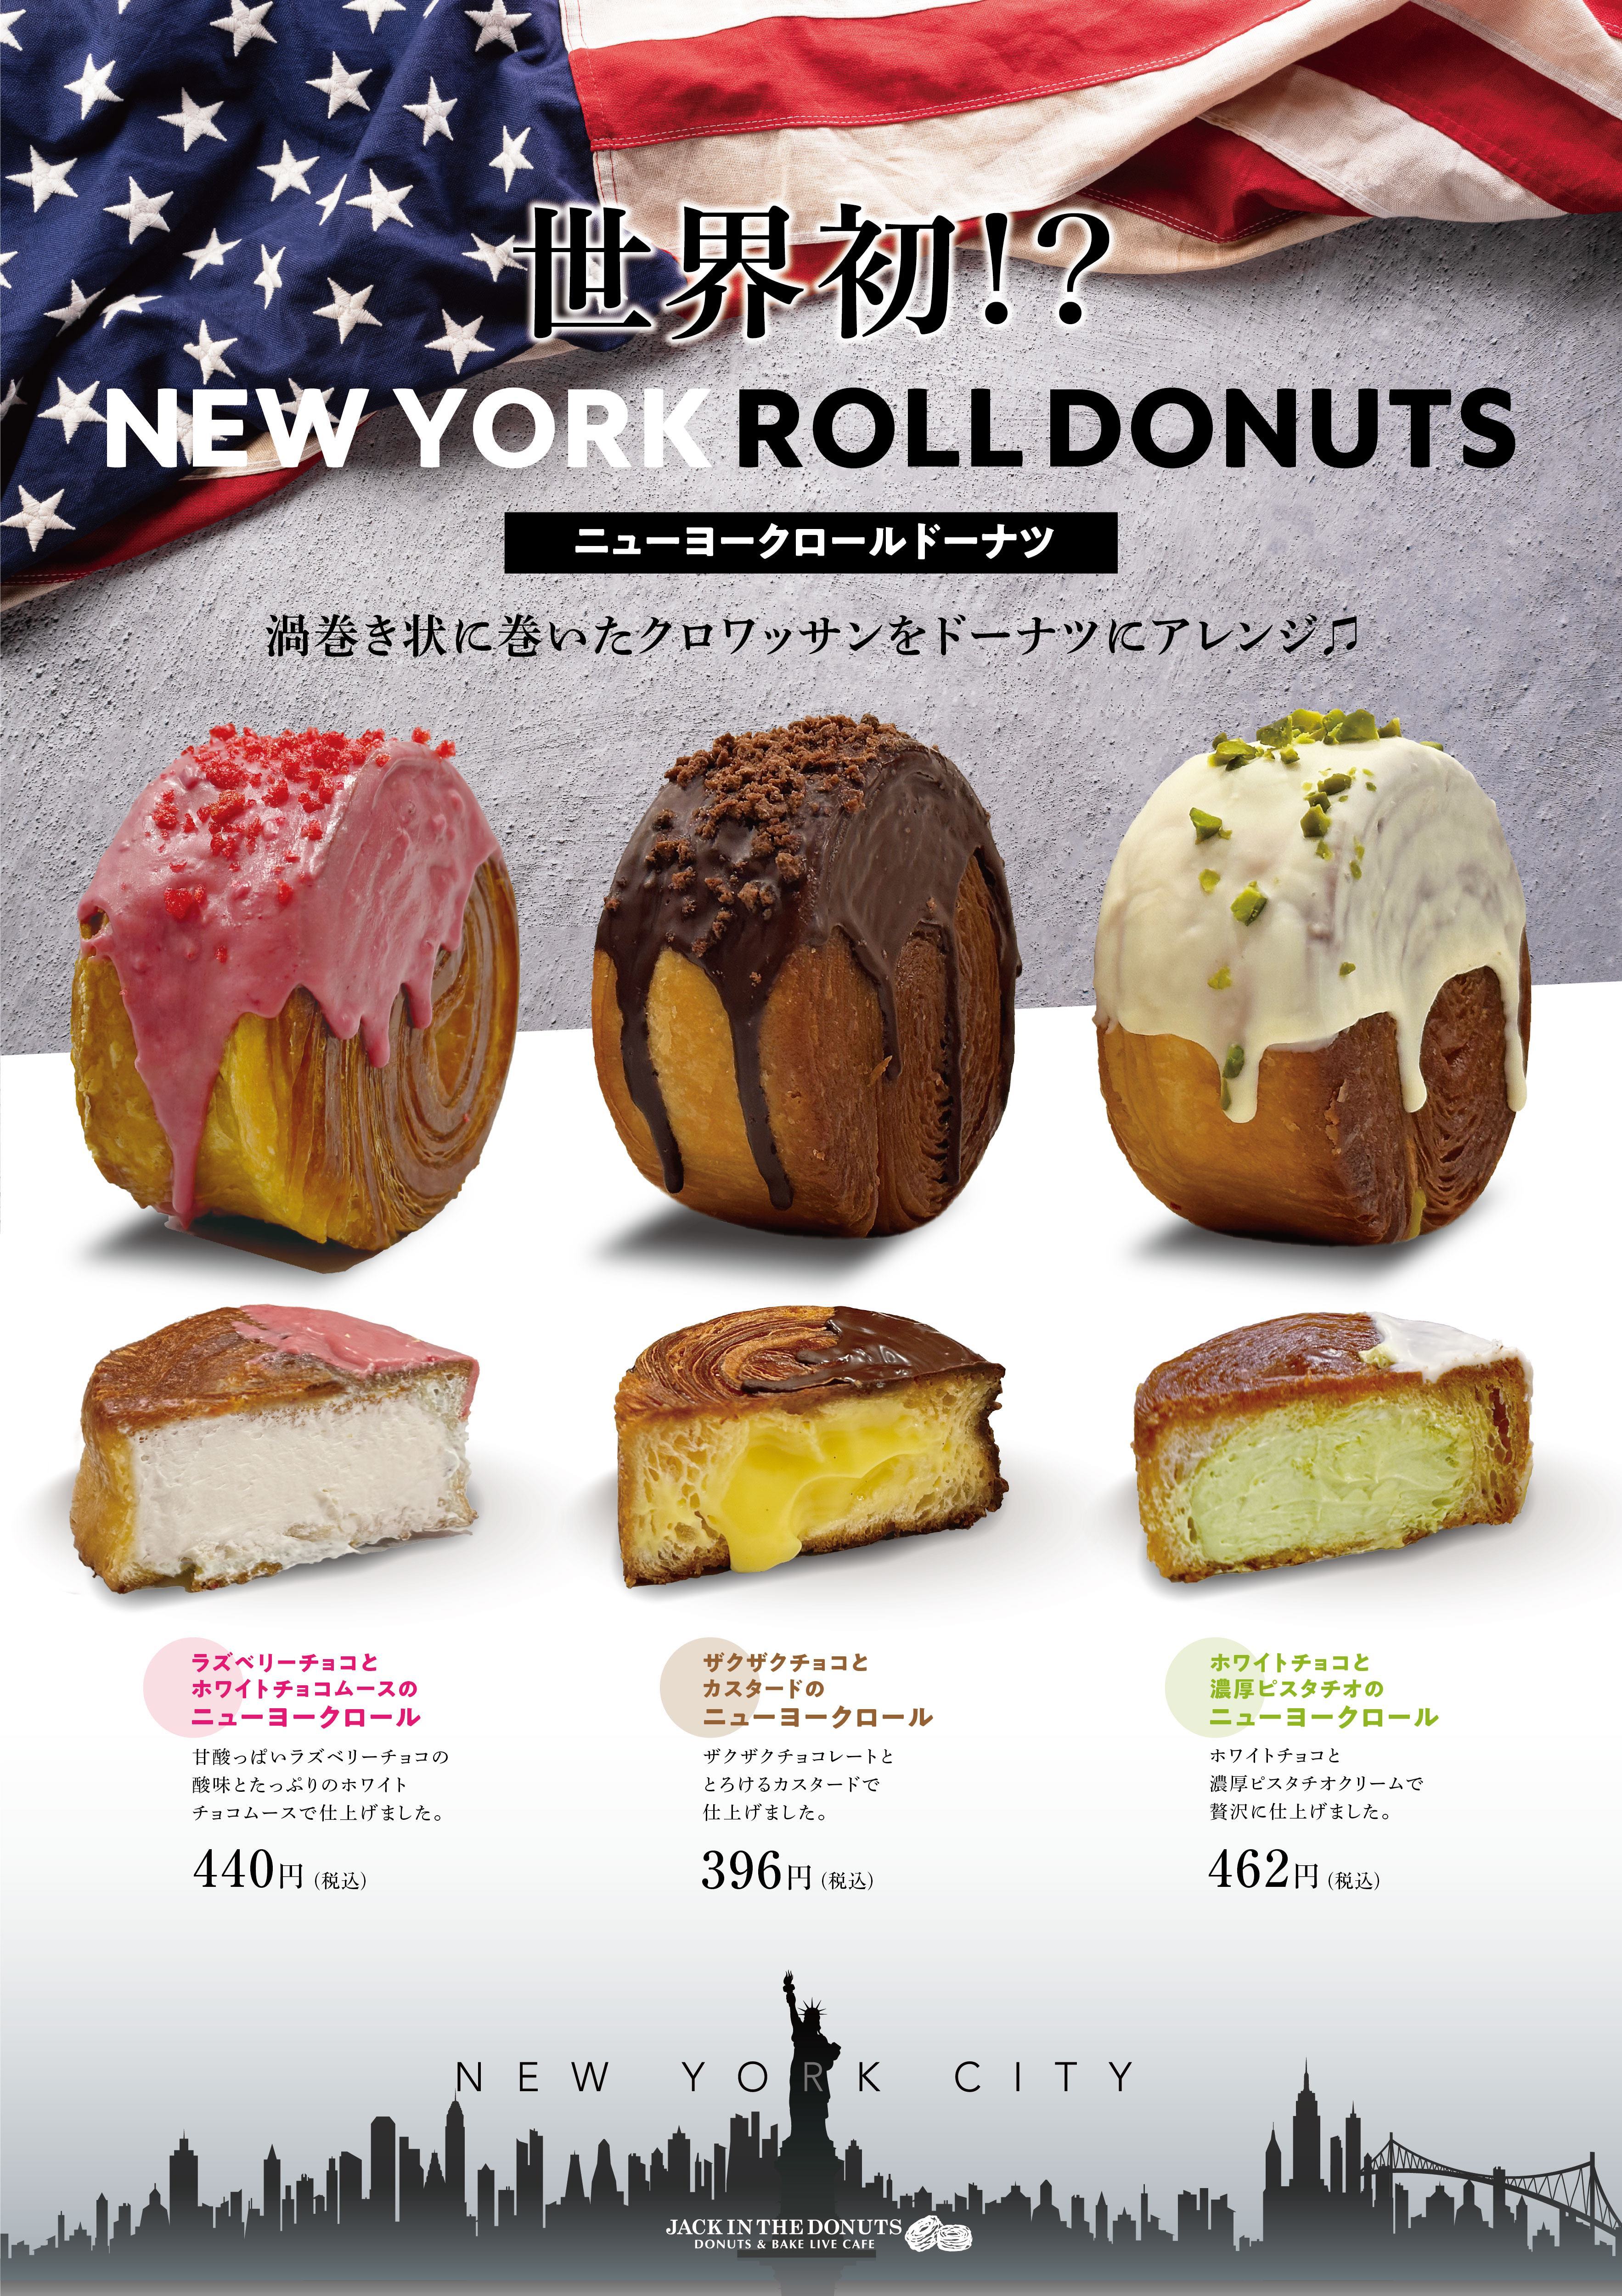 JACK IN THE DONUTS
新食感のニューヨークロールドーナツ3種を柏店で4月22日(月)発売